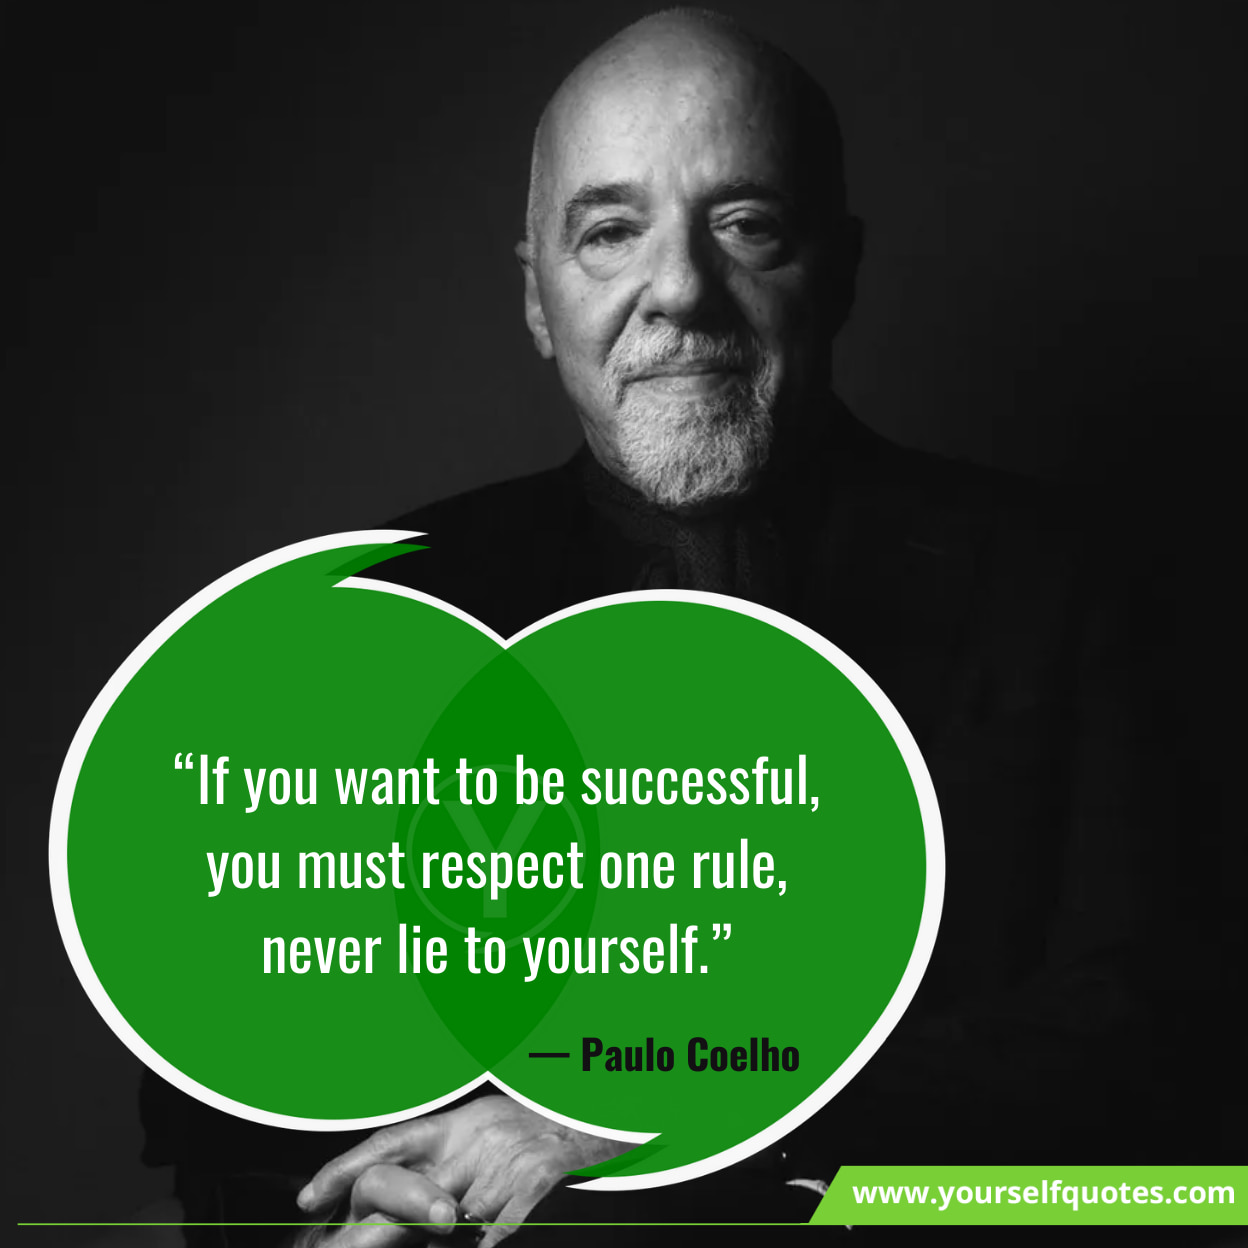 Paulo Coelho Quotes On Success